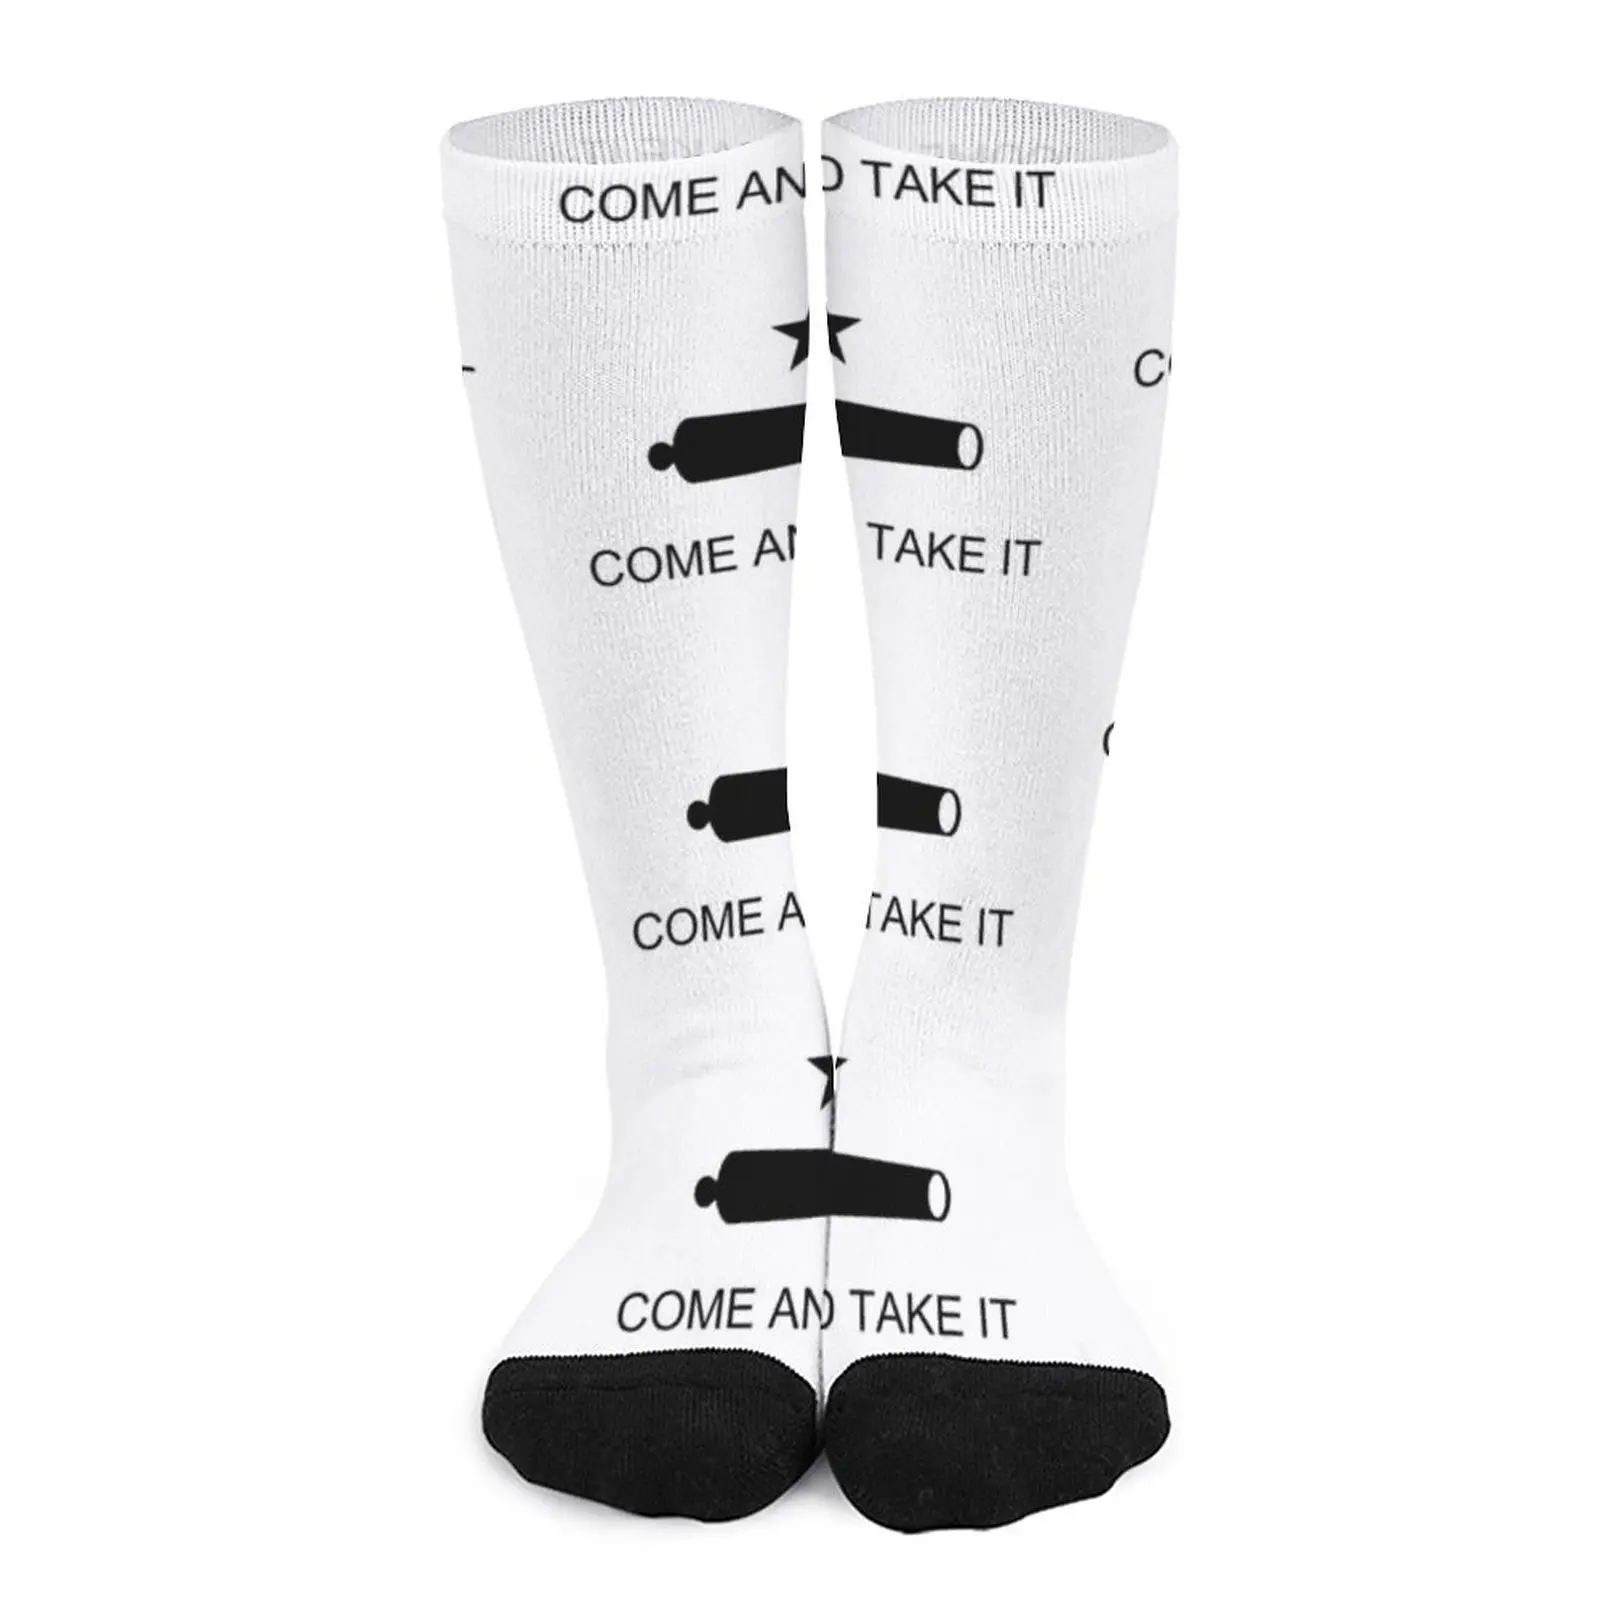 

Come and take it Flag (Texas) Socks sock men luxury socks